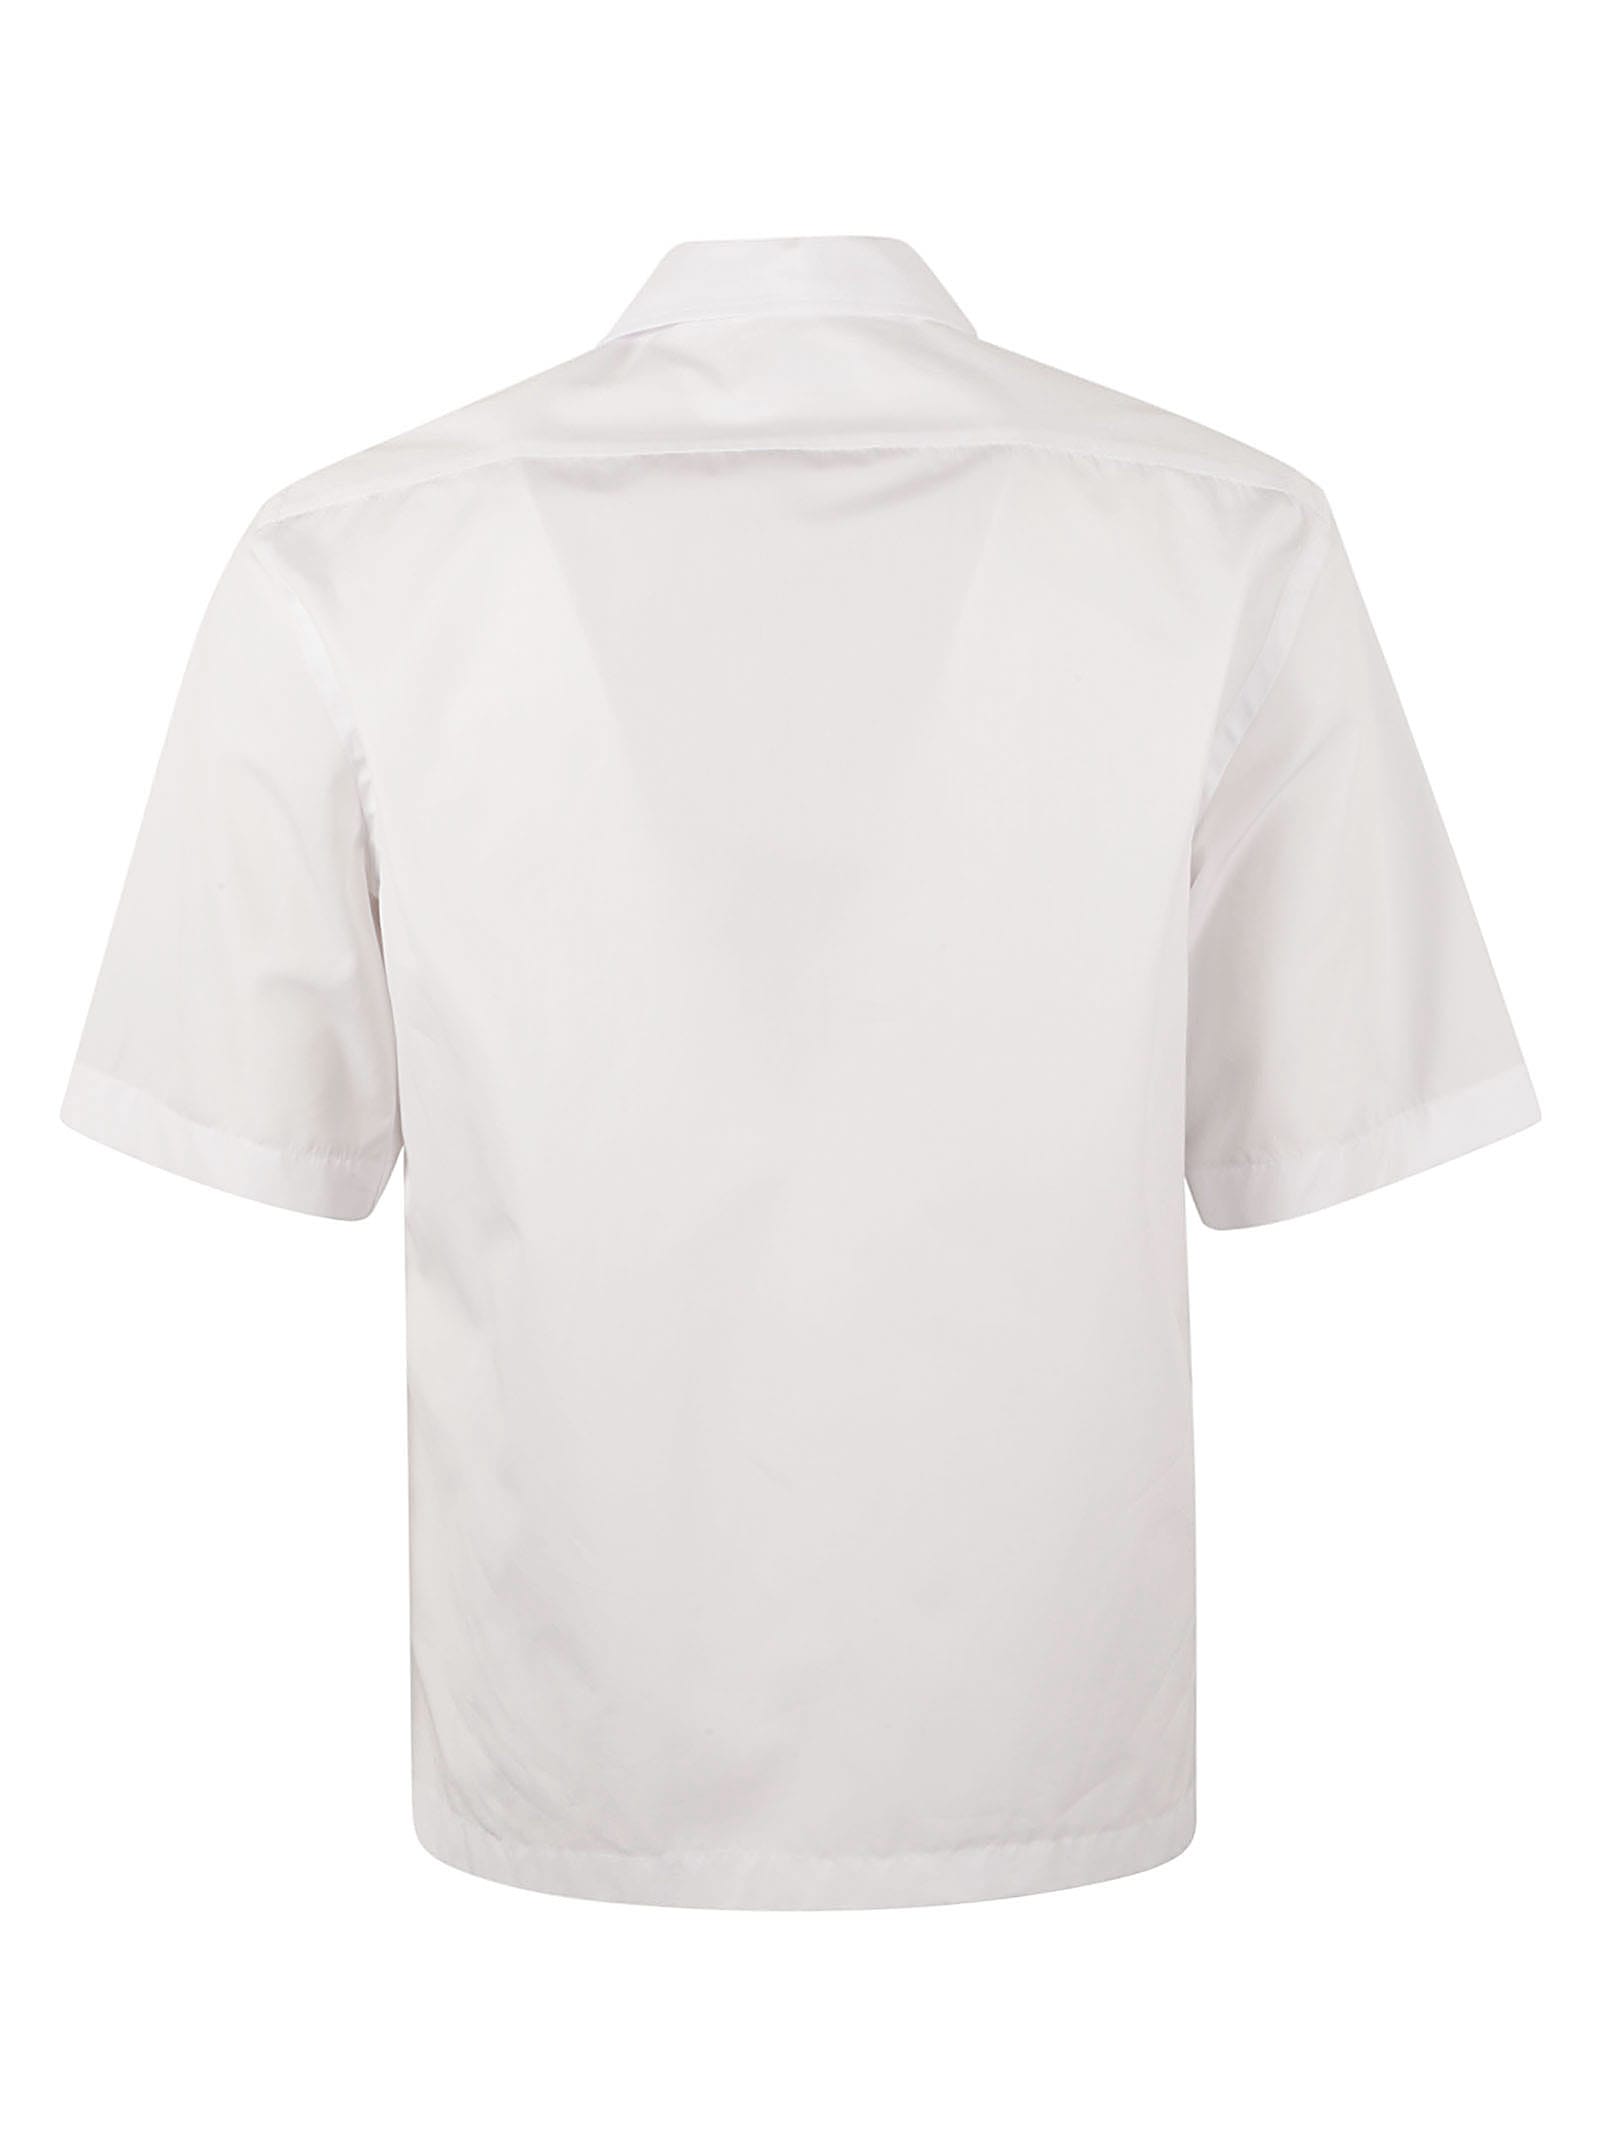 Shop Lardini Pocket Shirt In White